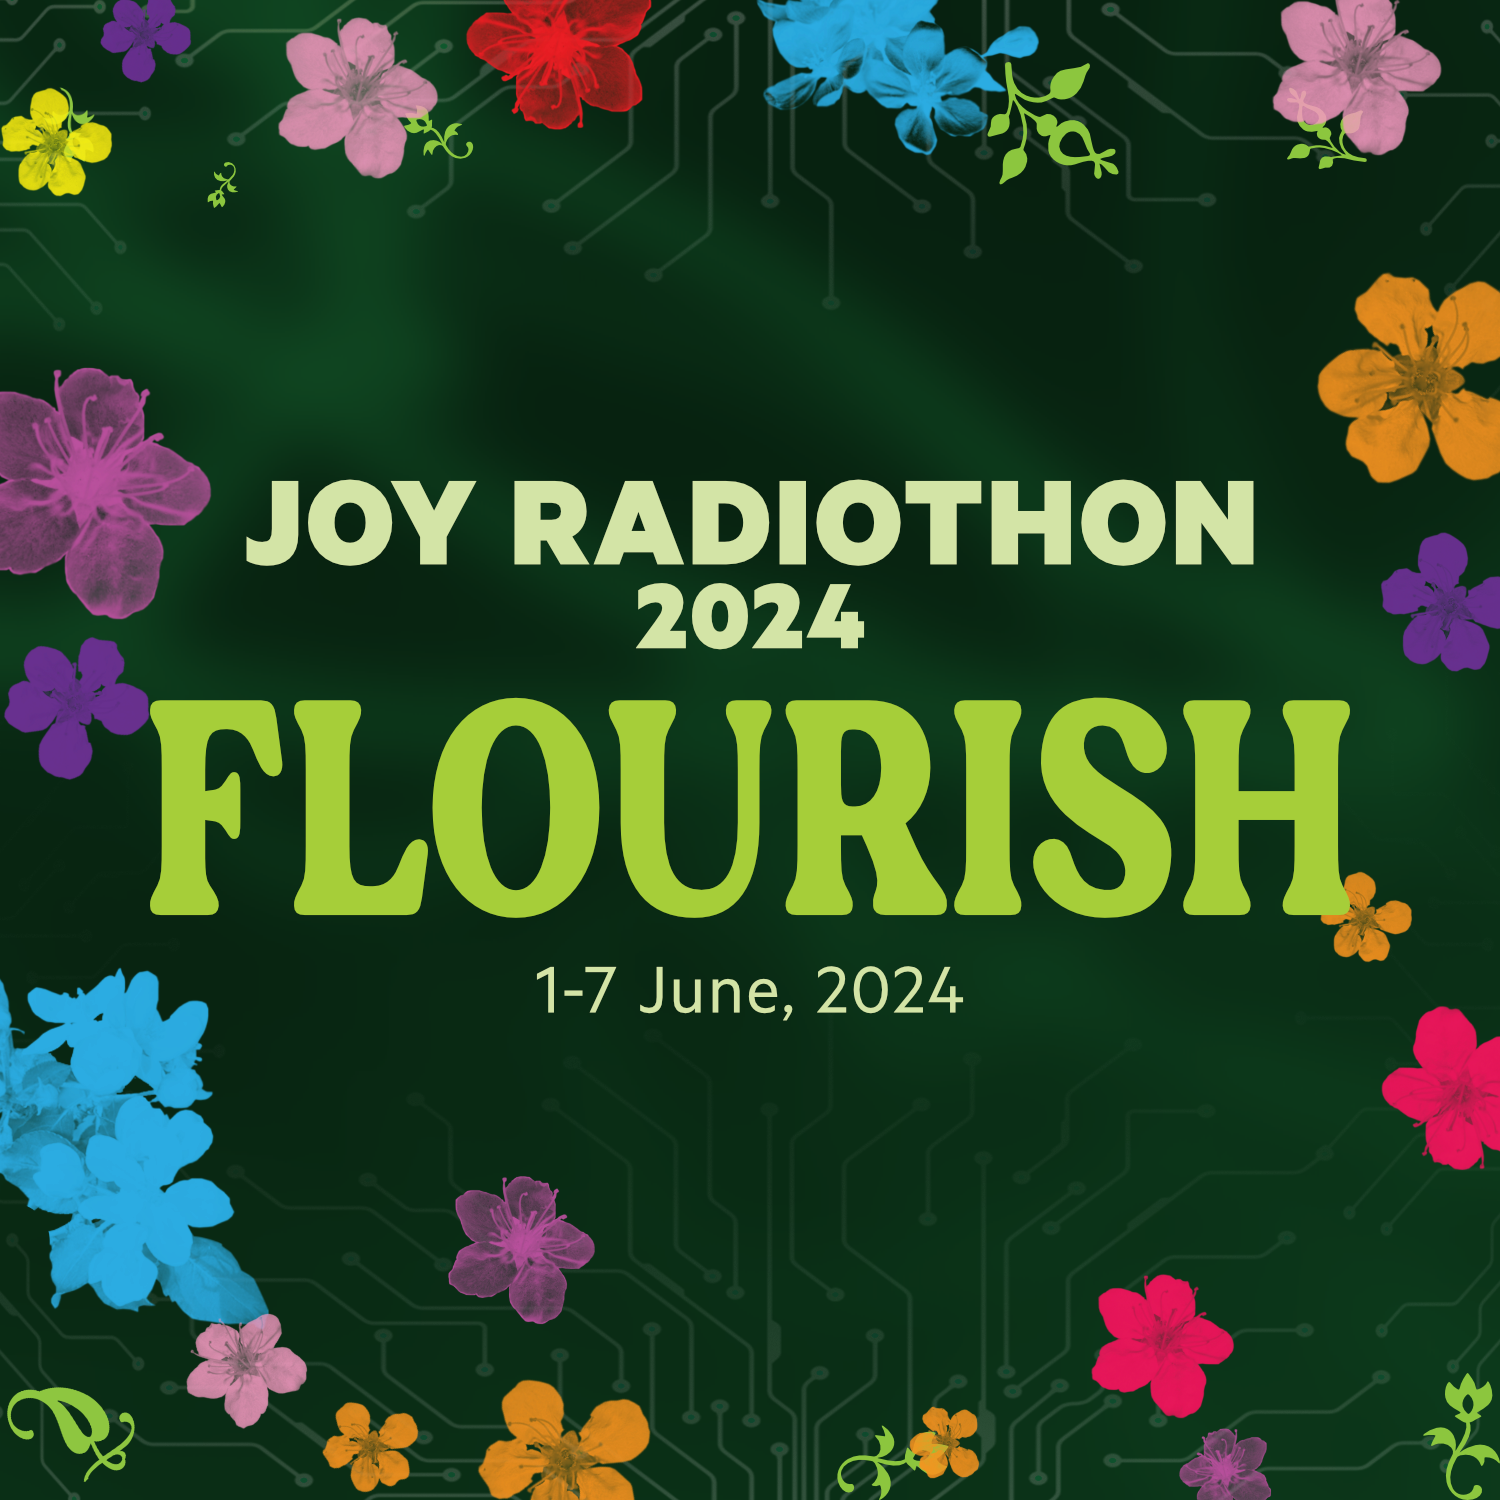 JOY Radiothon is set to FLOURISH in 2024!